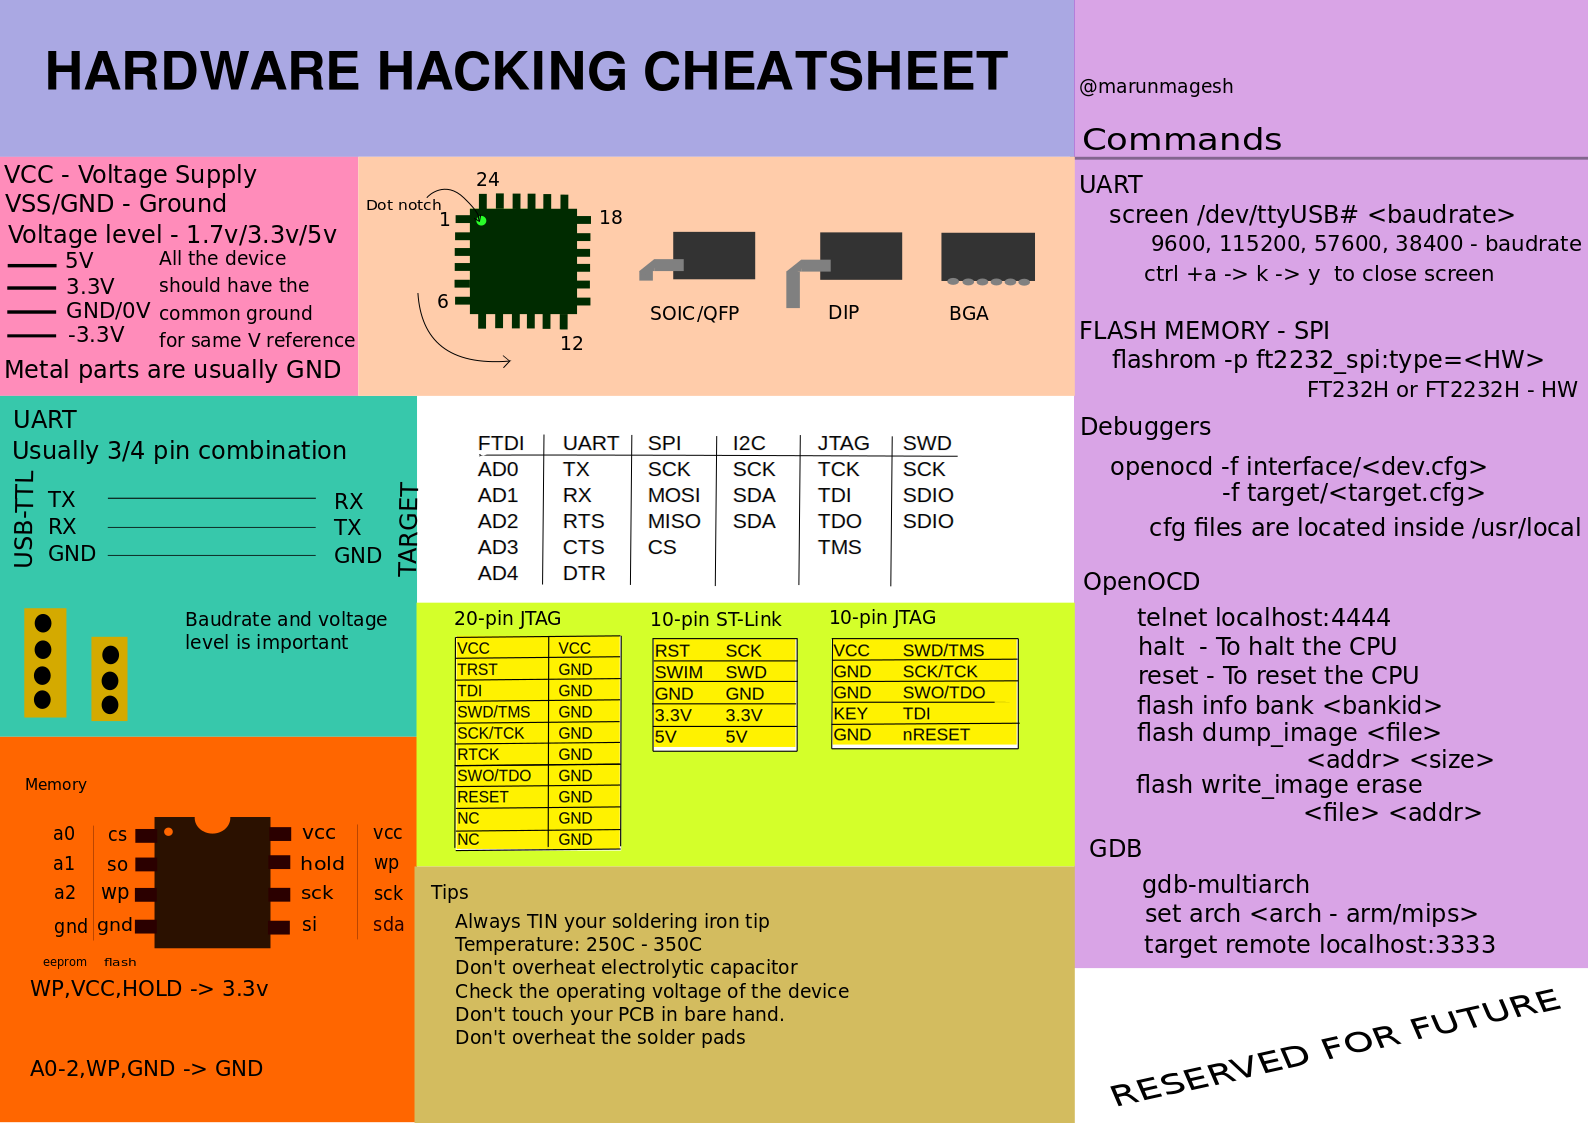 https://raw.githubusercontent.com/arunmagesh/hw_hacking_cheatsheet/master/cheatsheet_0.1.png